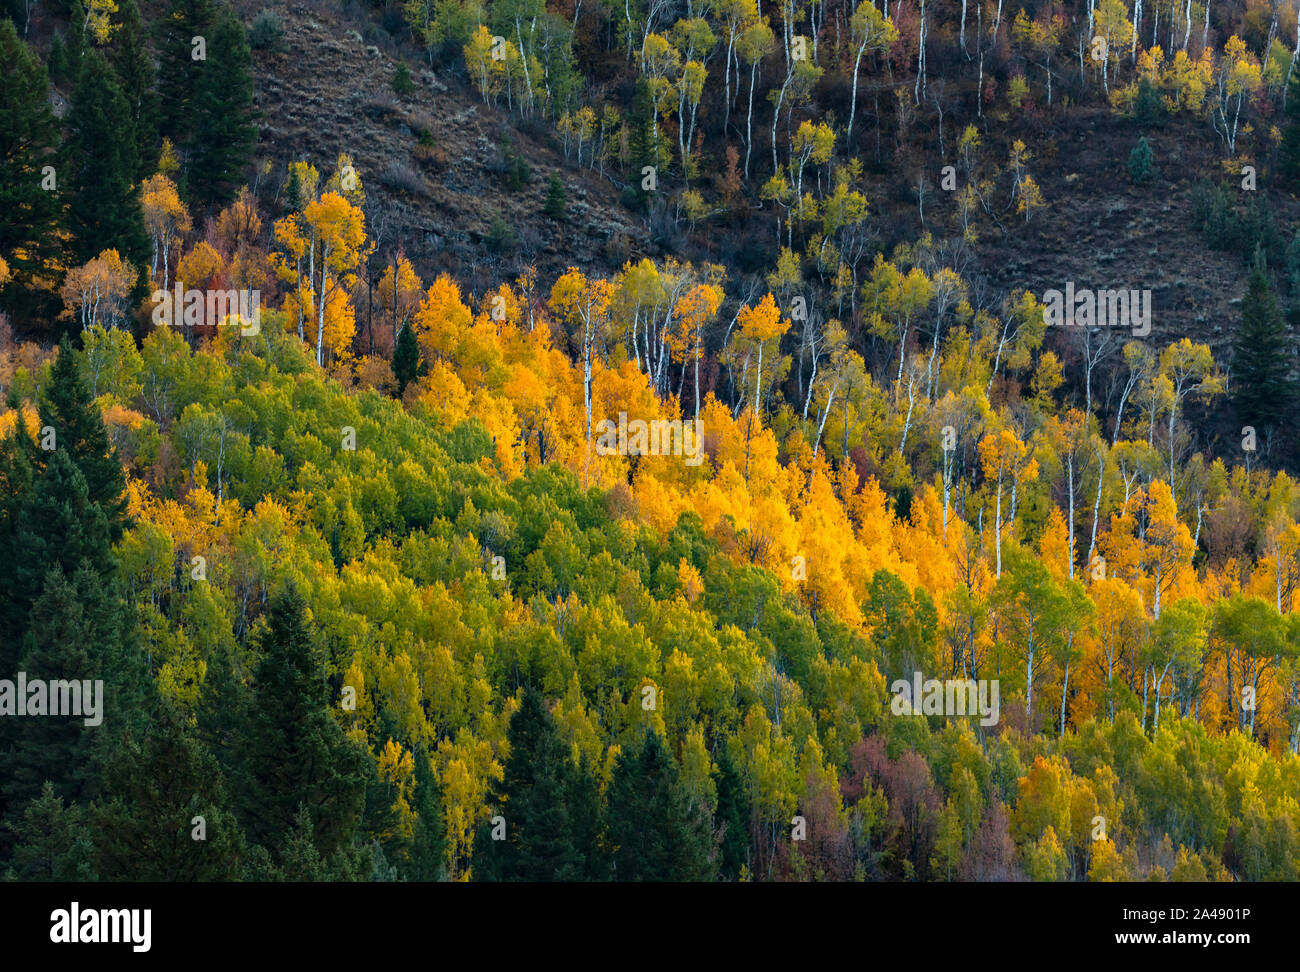 Die Farben des Herbstes auf den Bäumen entlang US Highway 89, der Logan Canyon Scenic Byway in Logan Canyon, Uinta-Wasatch-Cache National Forest, Utah, USA. Stockfoto